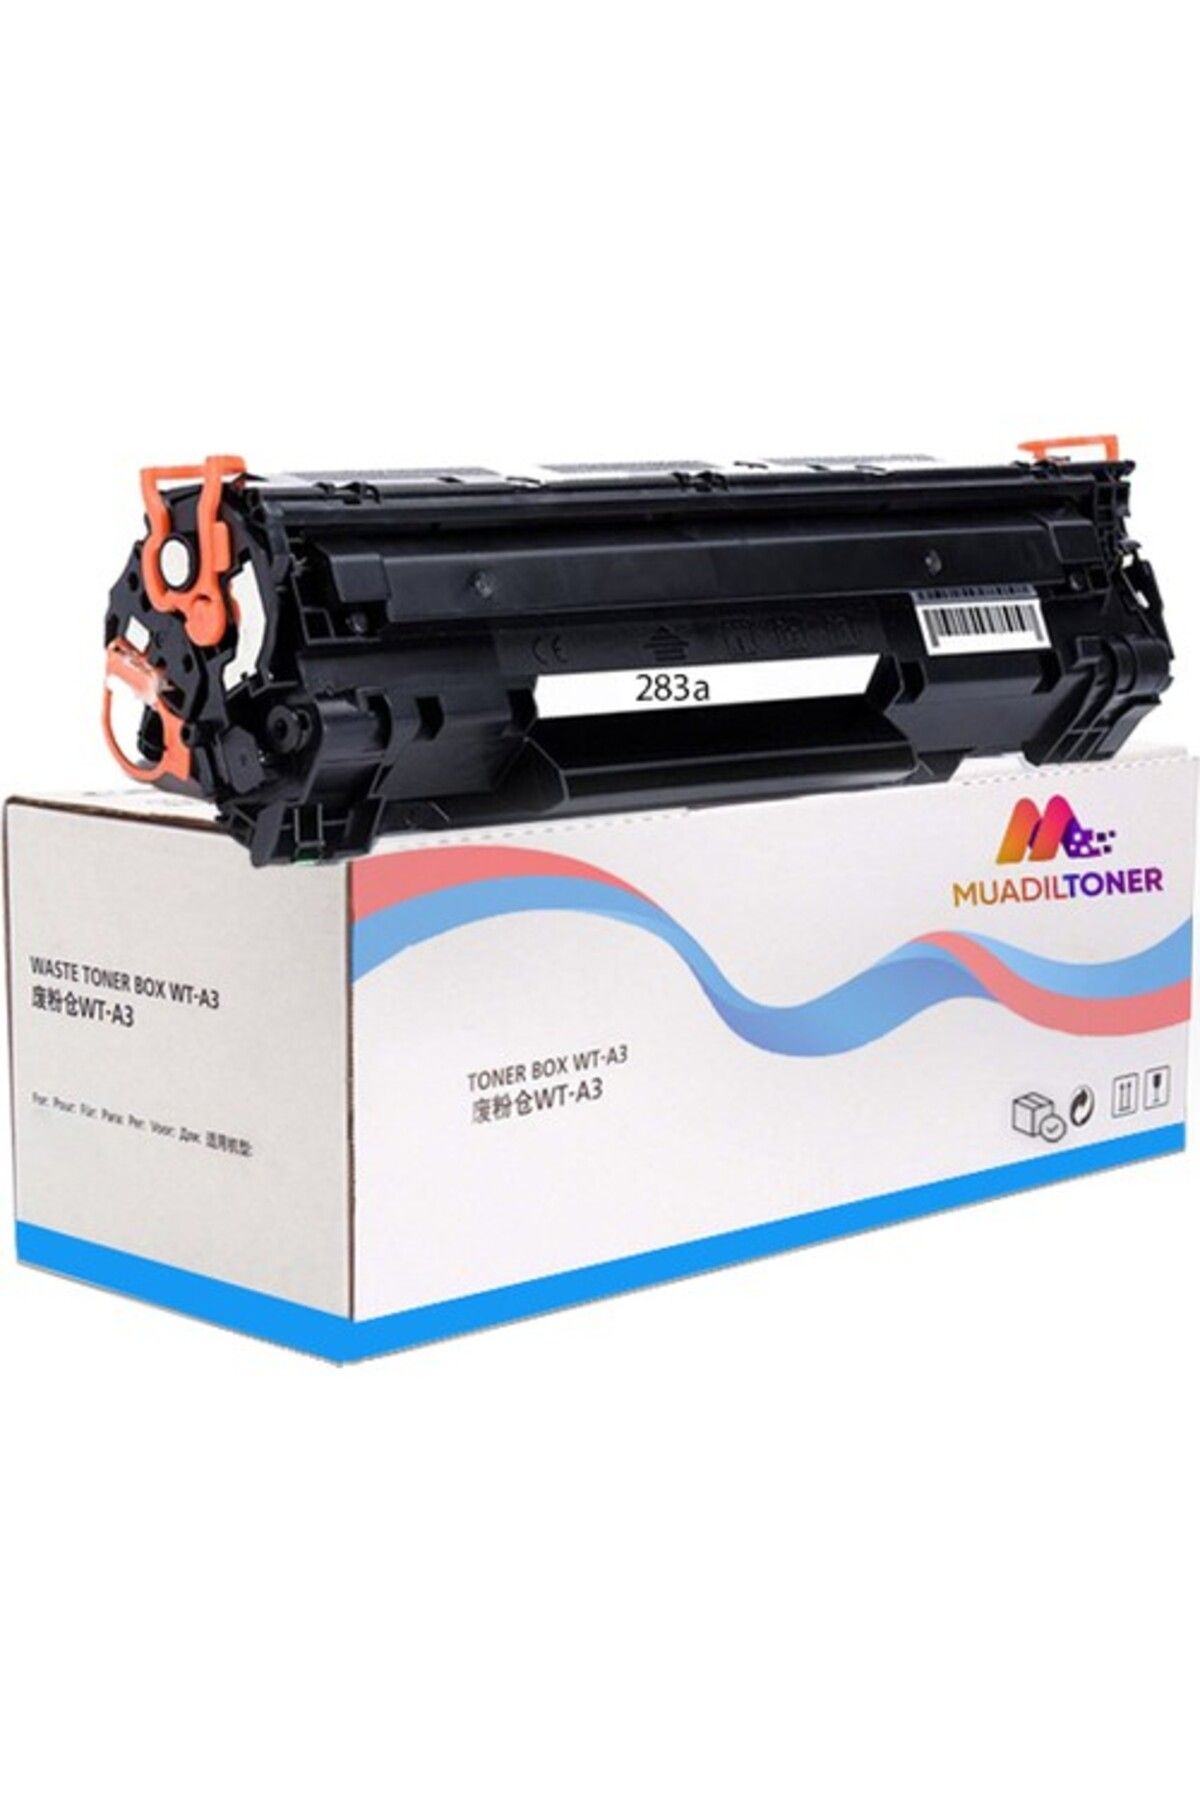 Colorprint Colorful Toner For Hp Laserjet Pro M127fn Mfp M127fw Muadil Toner 83a, 283a